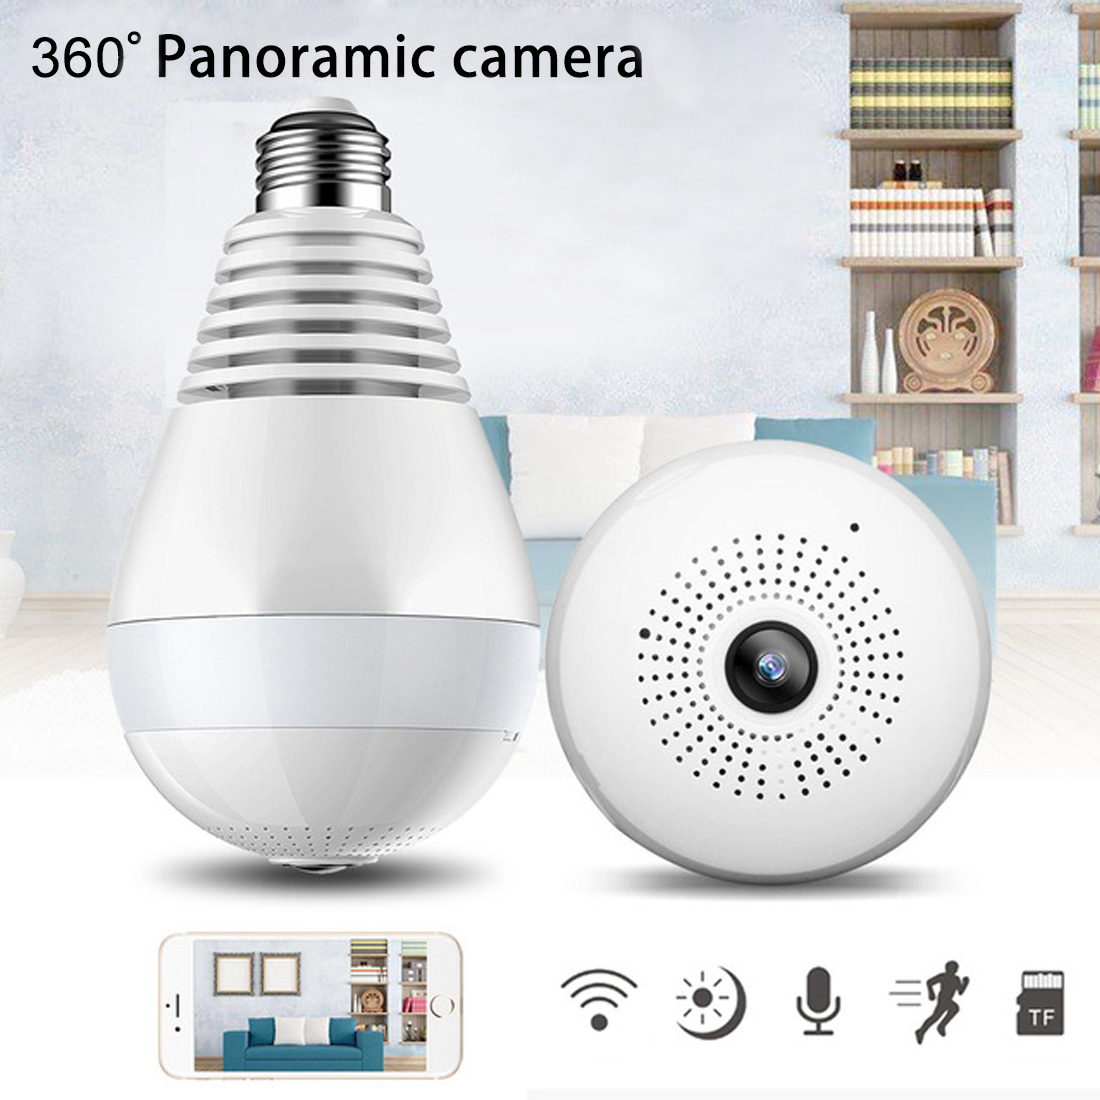 Панорамная скрытая камера WiFi в виде лампочки VR Cam Full View оптом - Фото №2